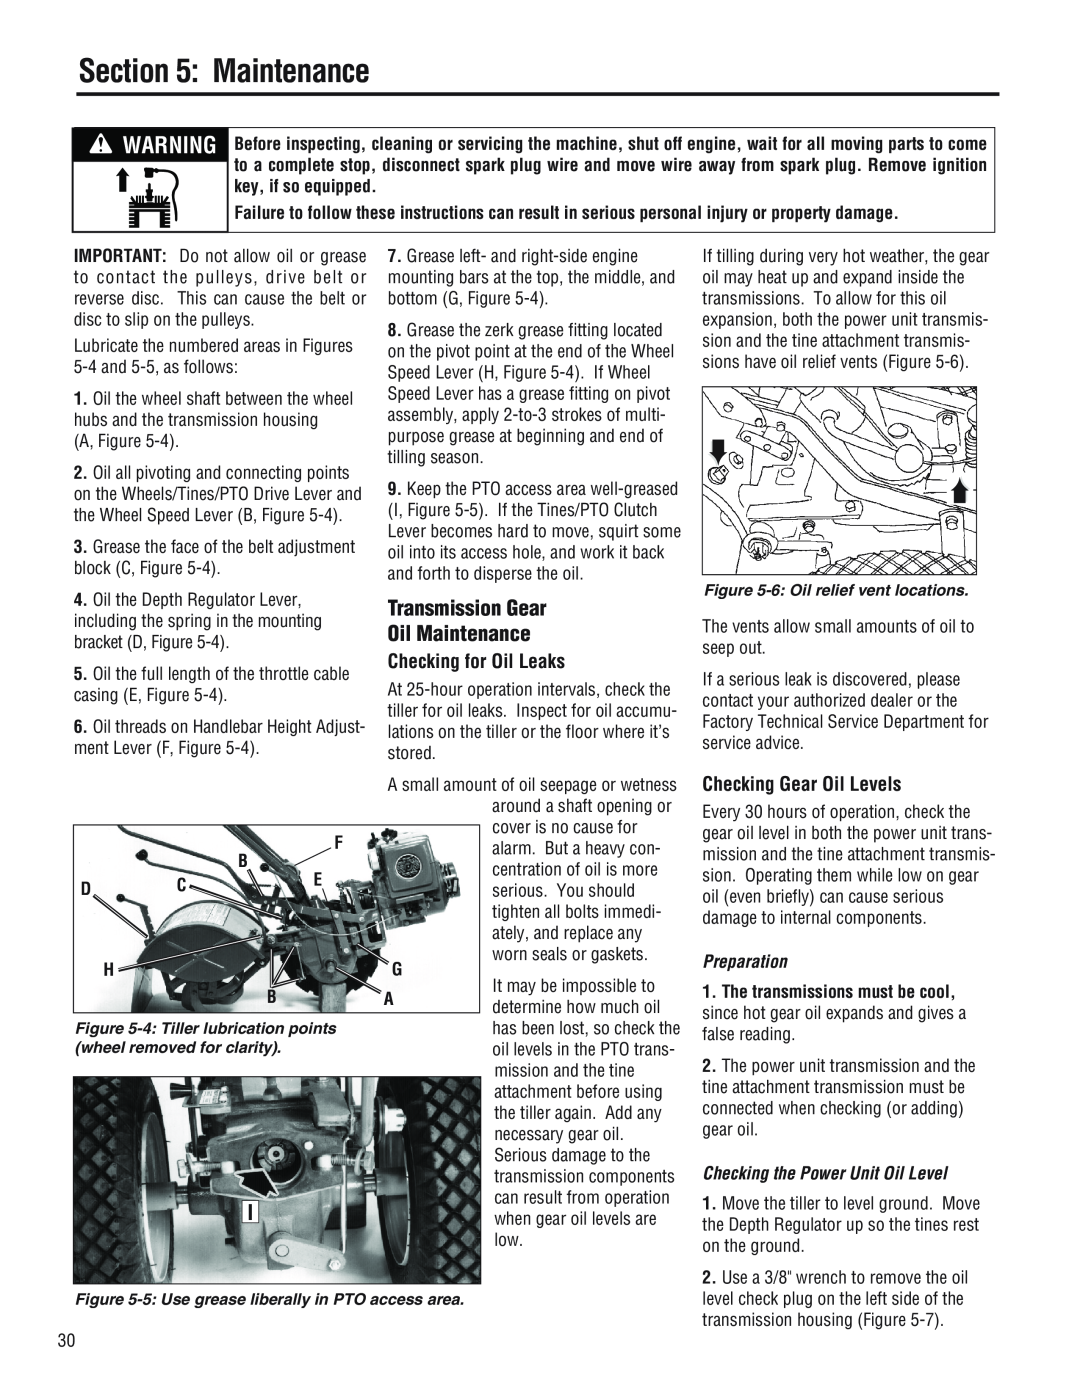 Troy-Bilt E686N manual Transmission Gear Oil Maintenance, Checking for Oil Leaks, Checking Gear Oil Levels, Preparation 